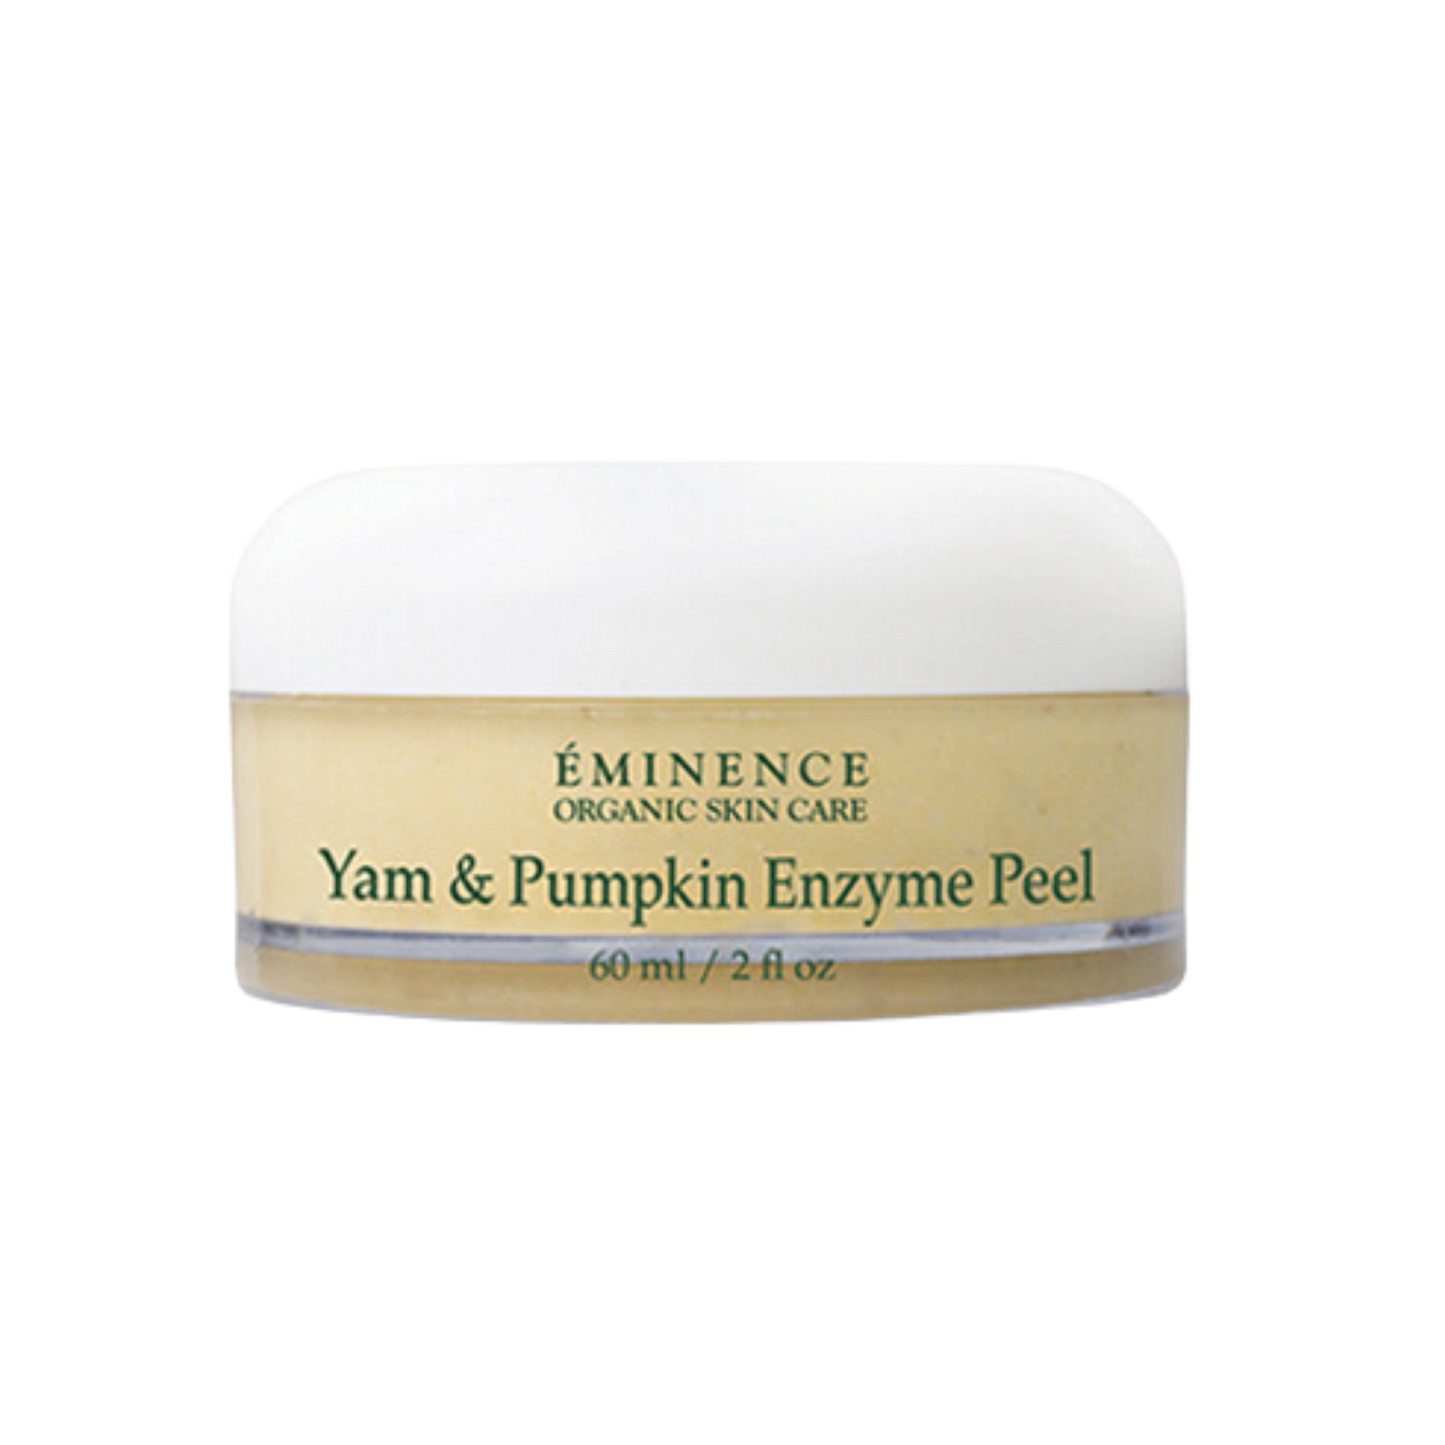 Eminence Yam & Pumpkin Enzyme Peel